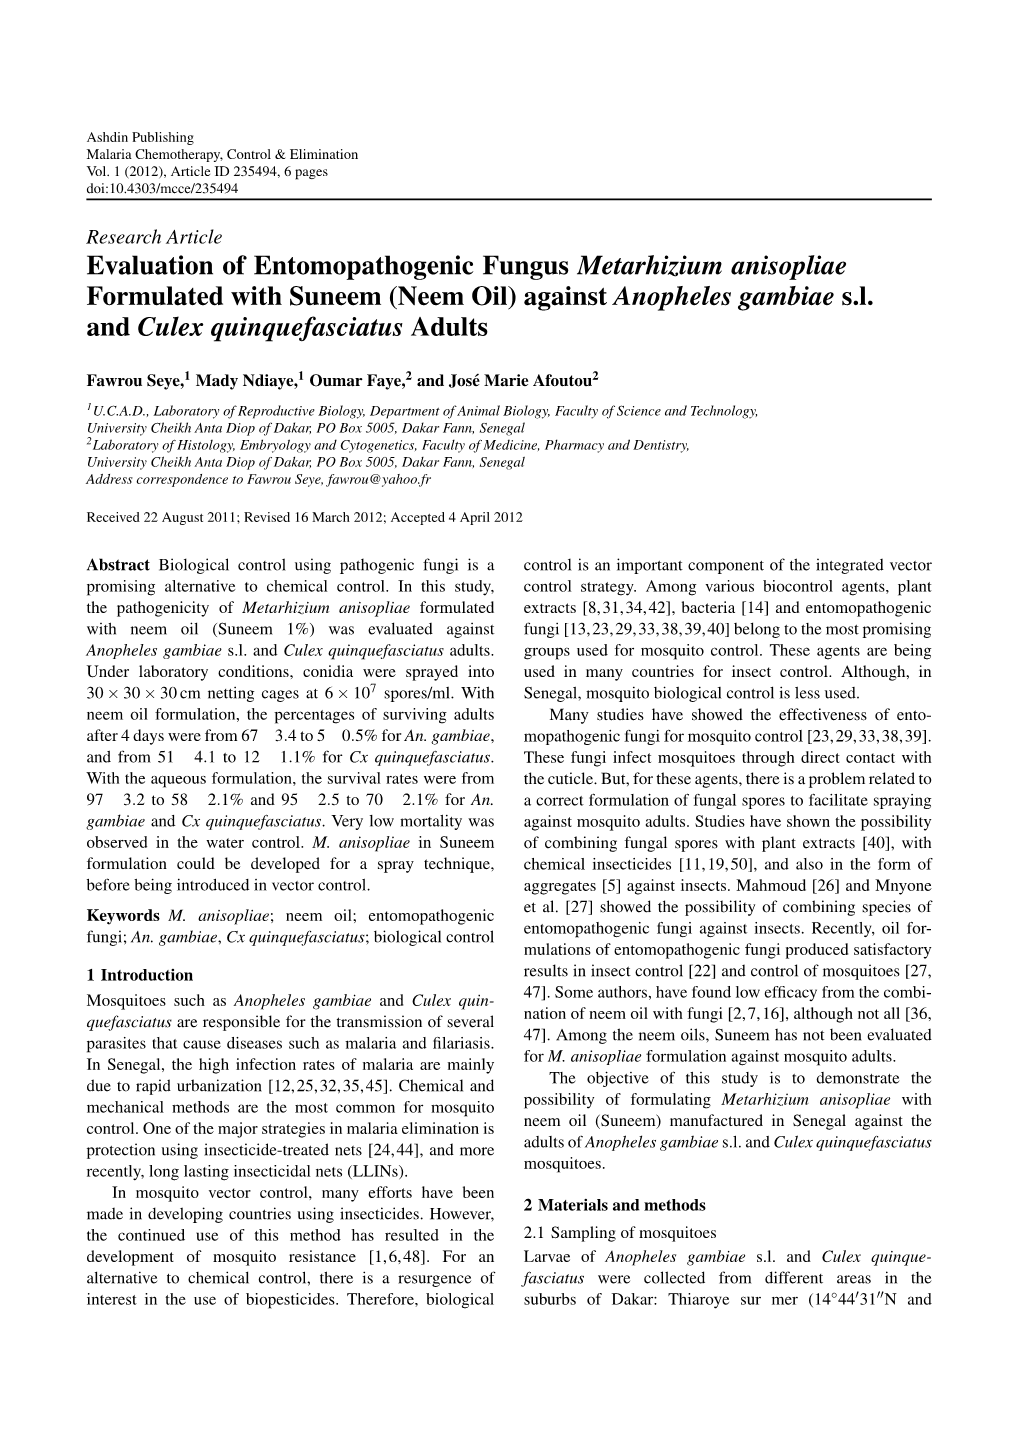 Evaluation of Entomopathogenic Fungus Metarhizium Anisopliae Formulated with Suneem (Neem Oil) Against Anopheles Gambiae S.L